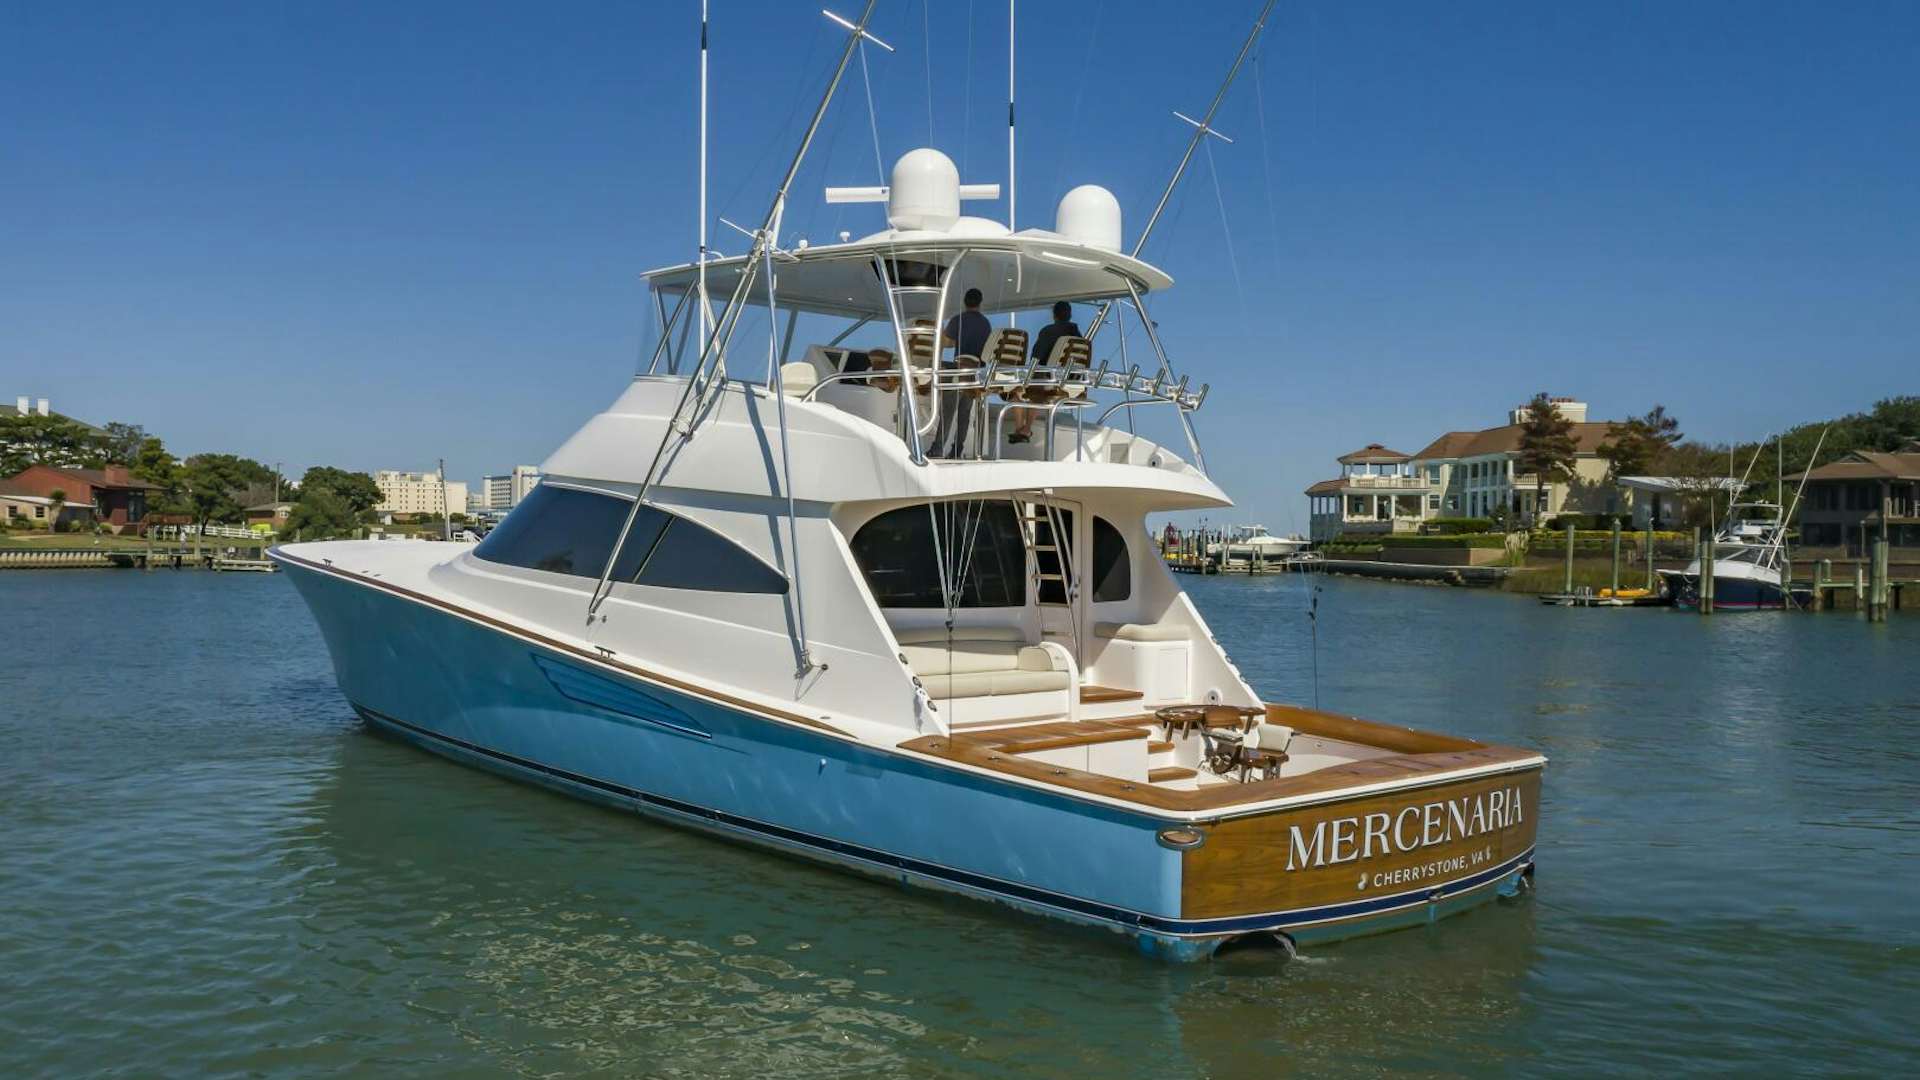 Mercenaria
Yacht for Sale